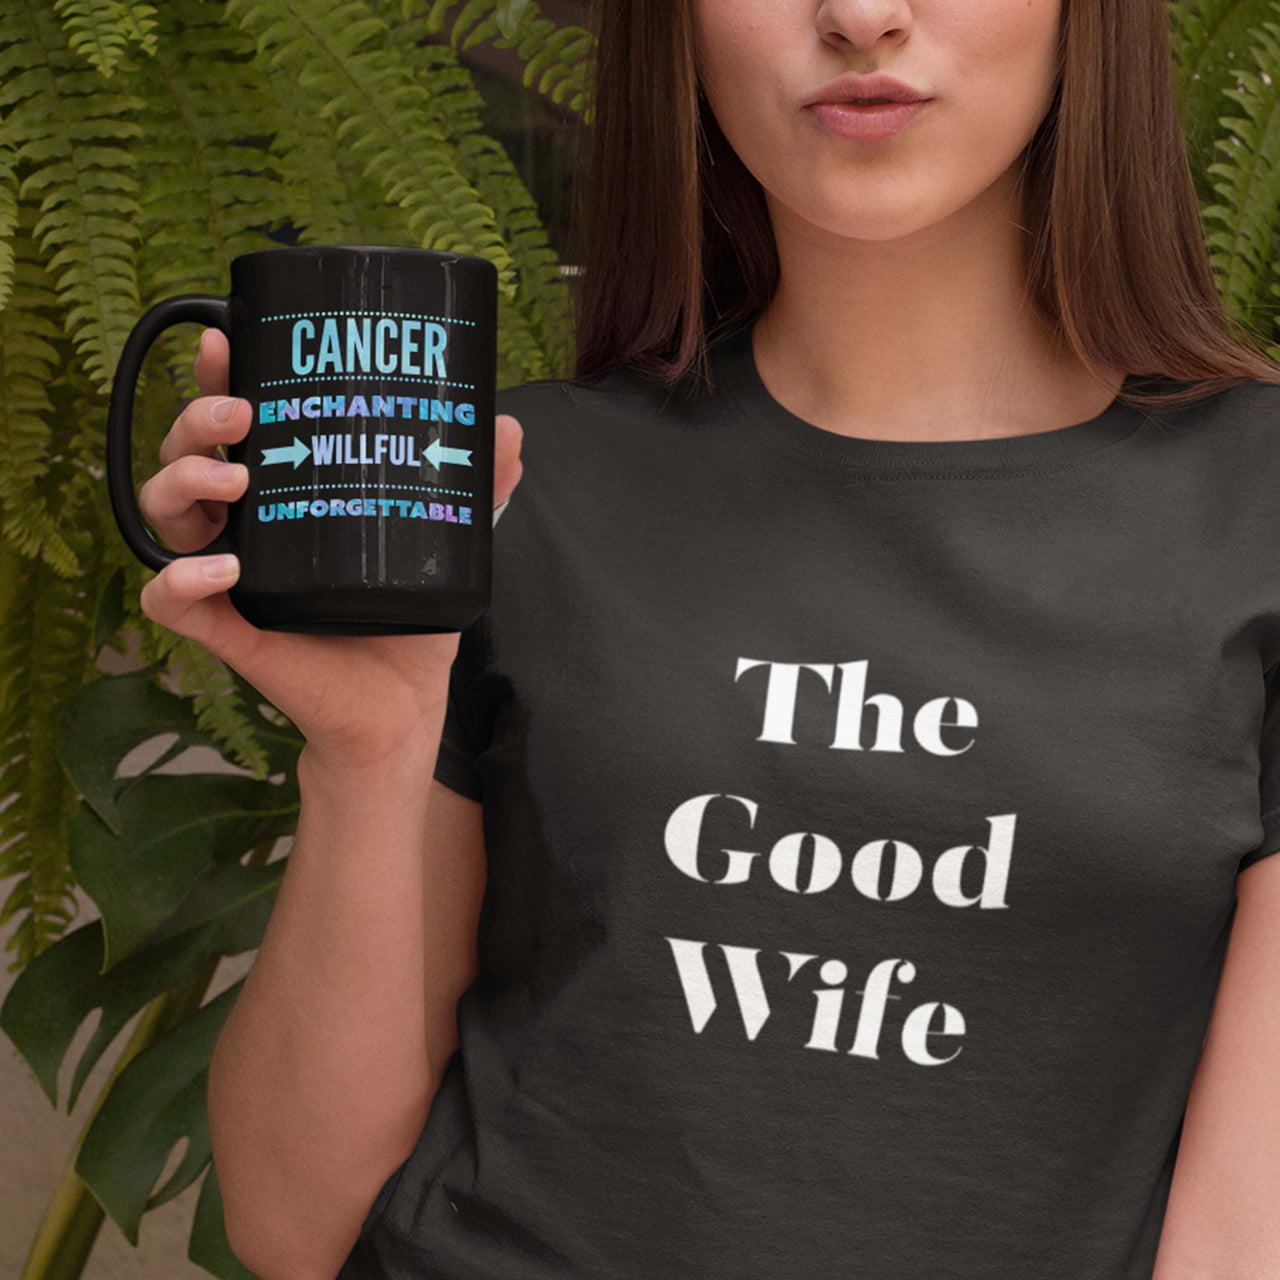 cancer traits horoscope black coffee mug